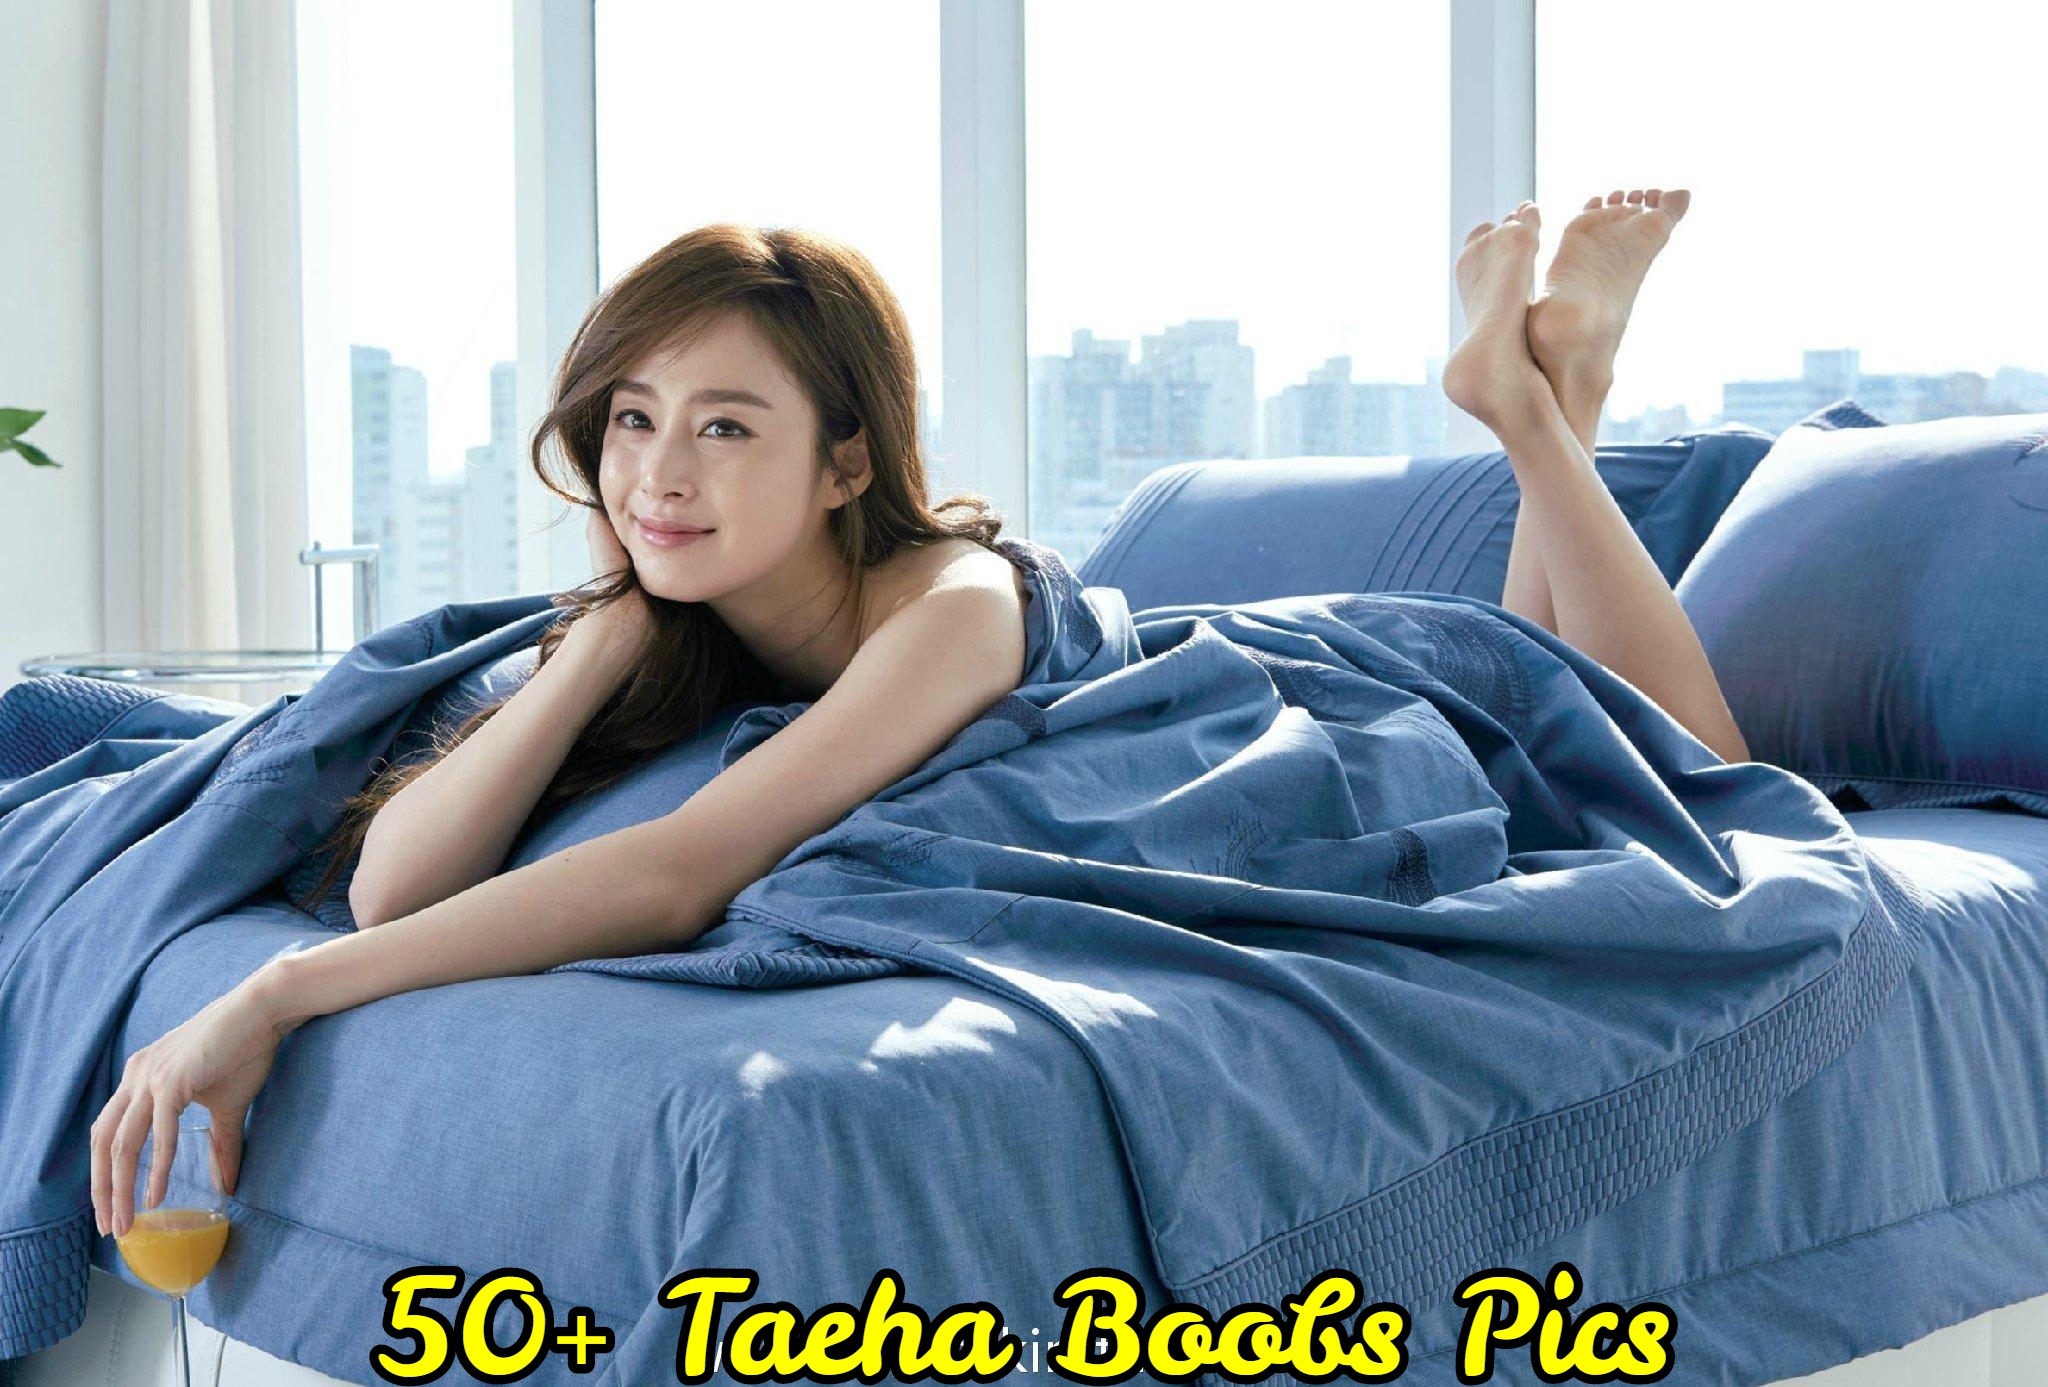 Taeha Boobs Pics